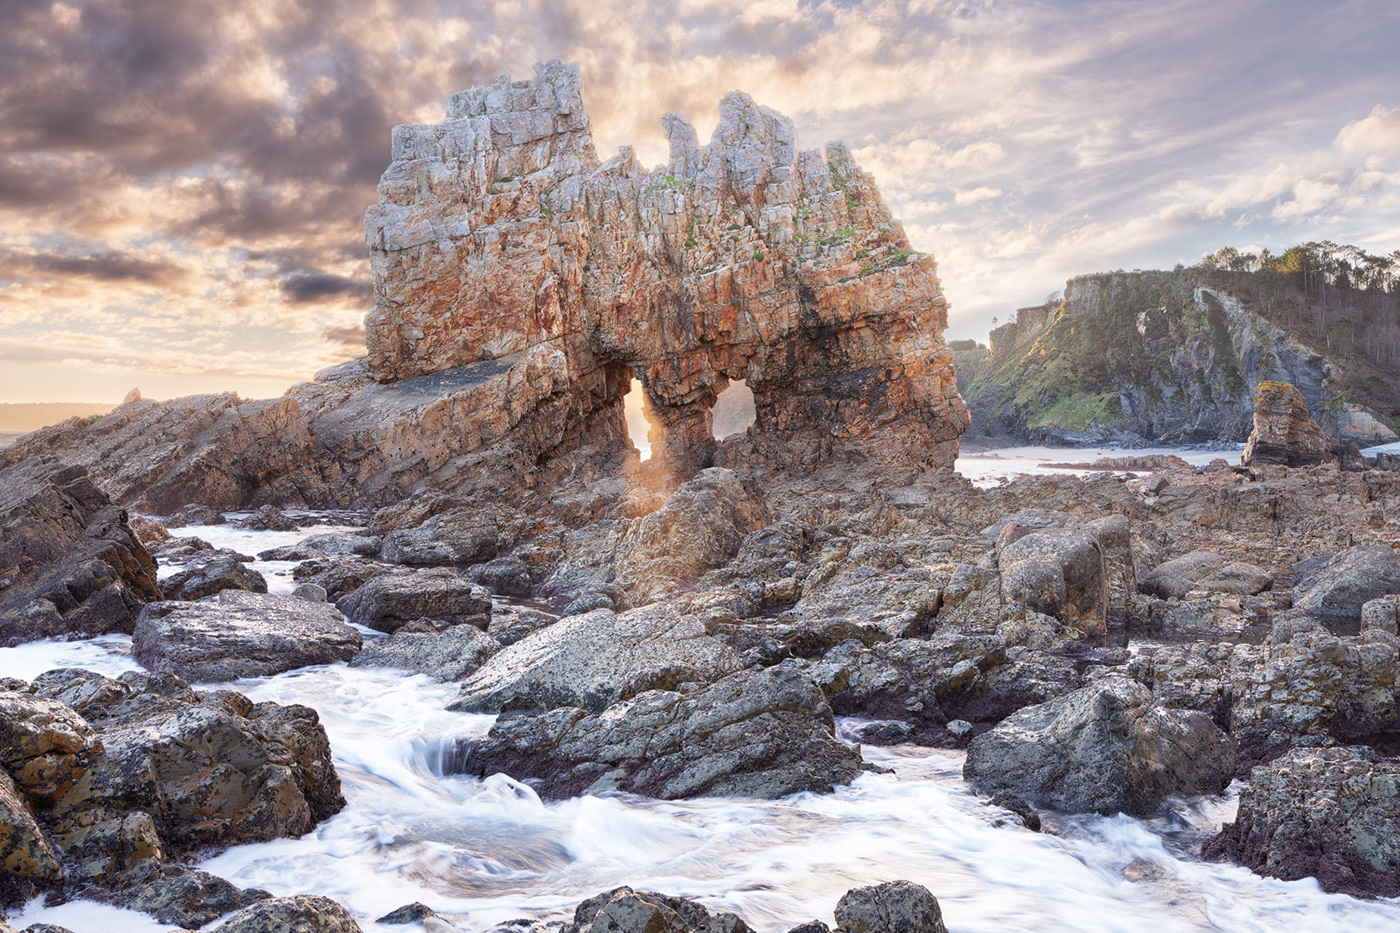 Coast Nature Landscape sunset cliffs beach lighthouse Ocean Sea Stack storm